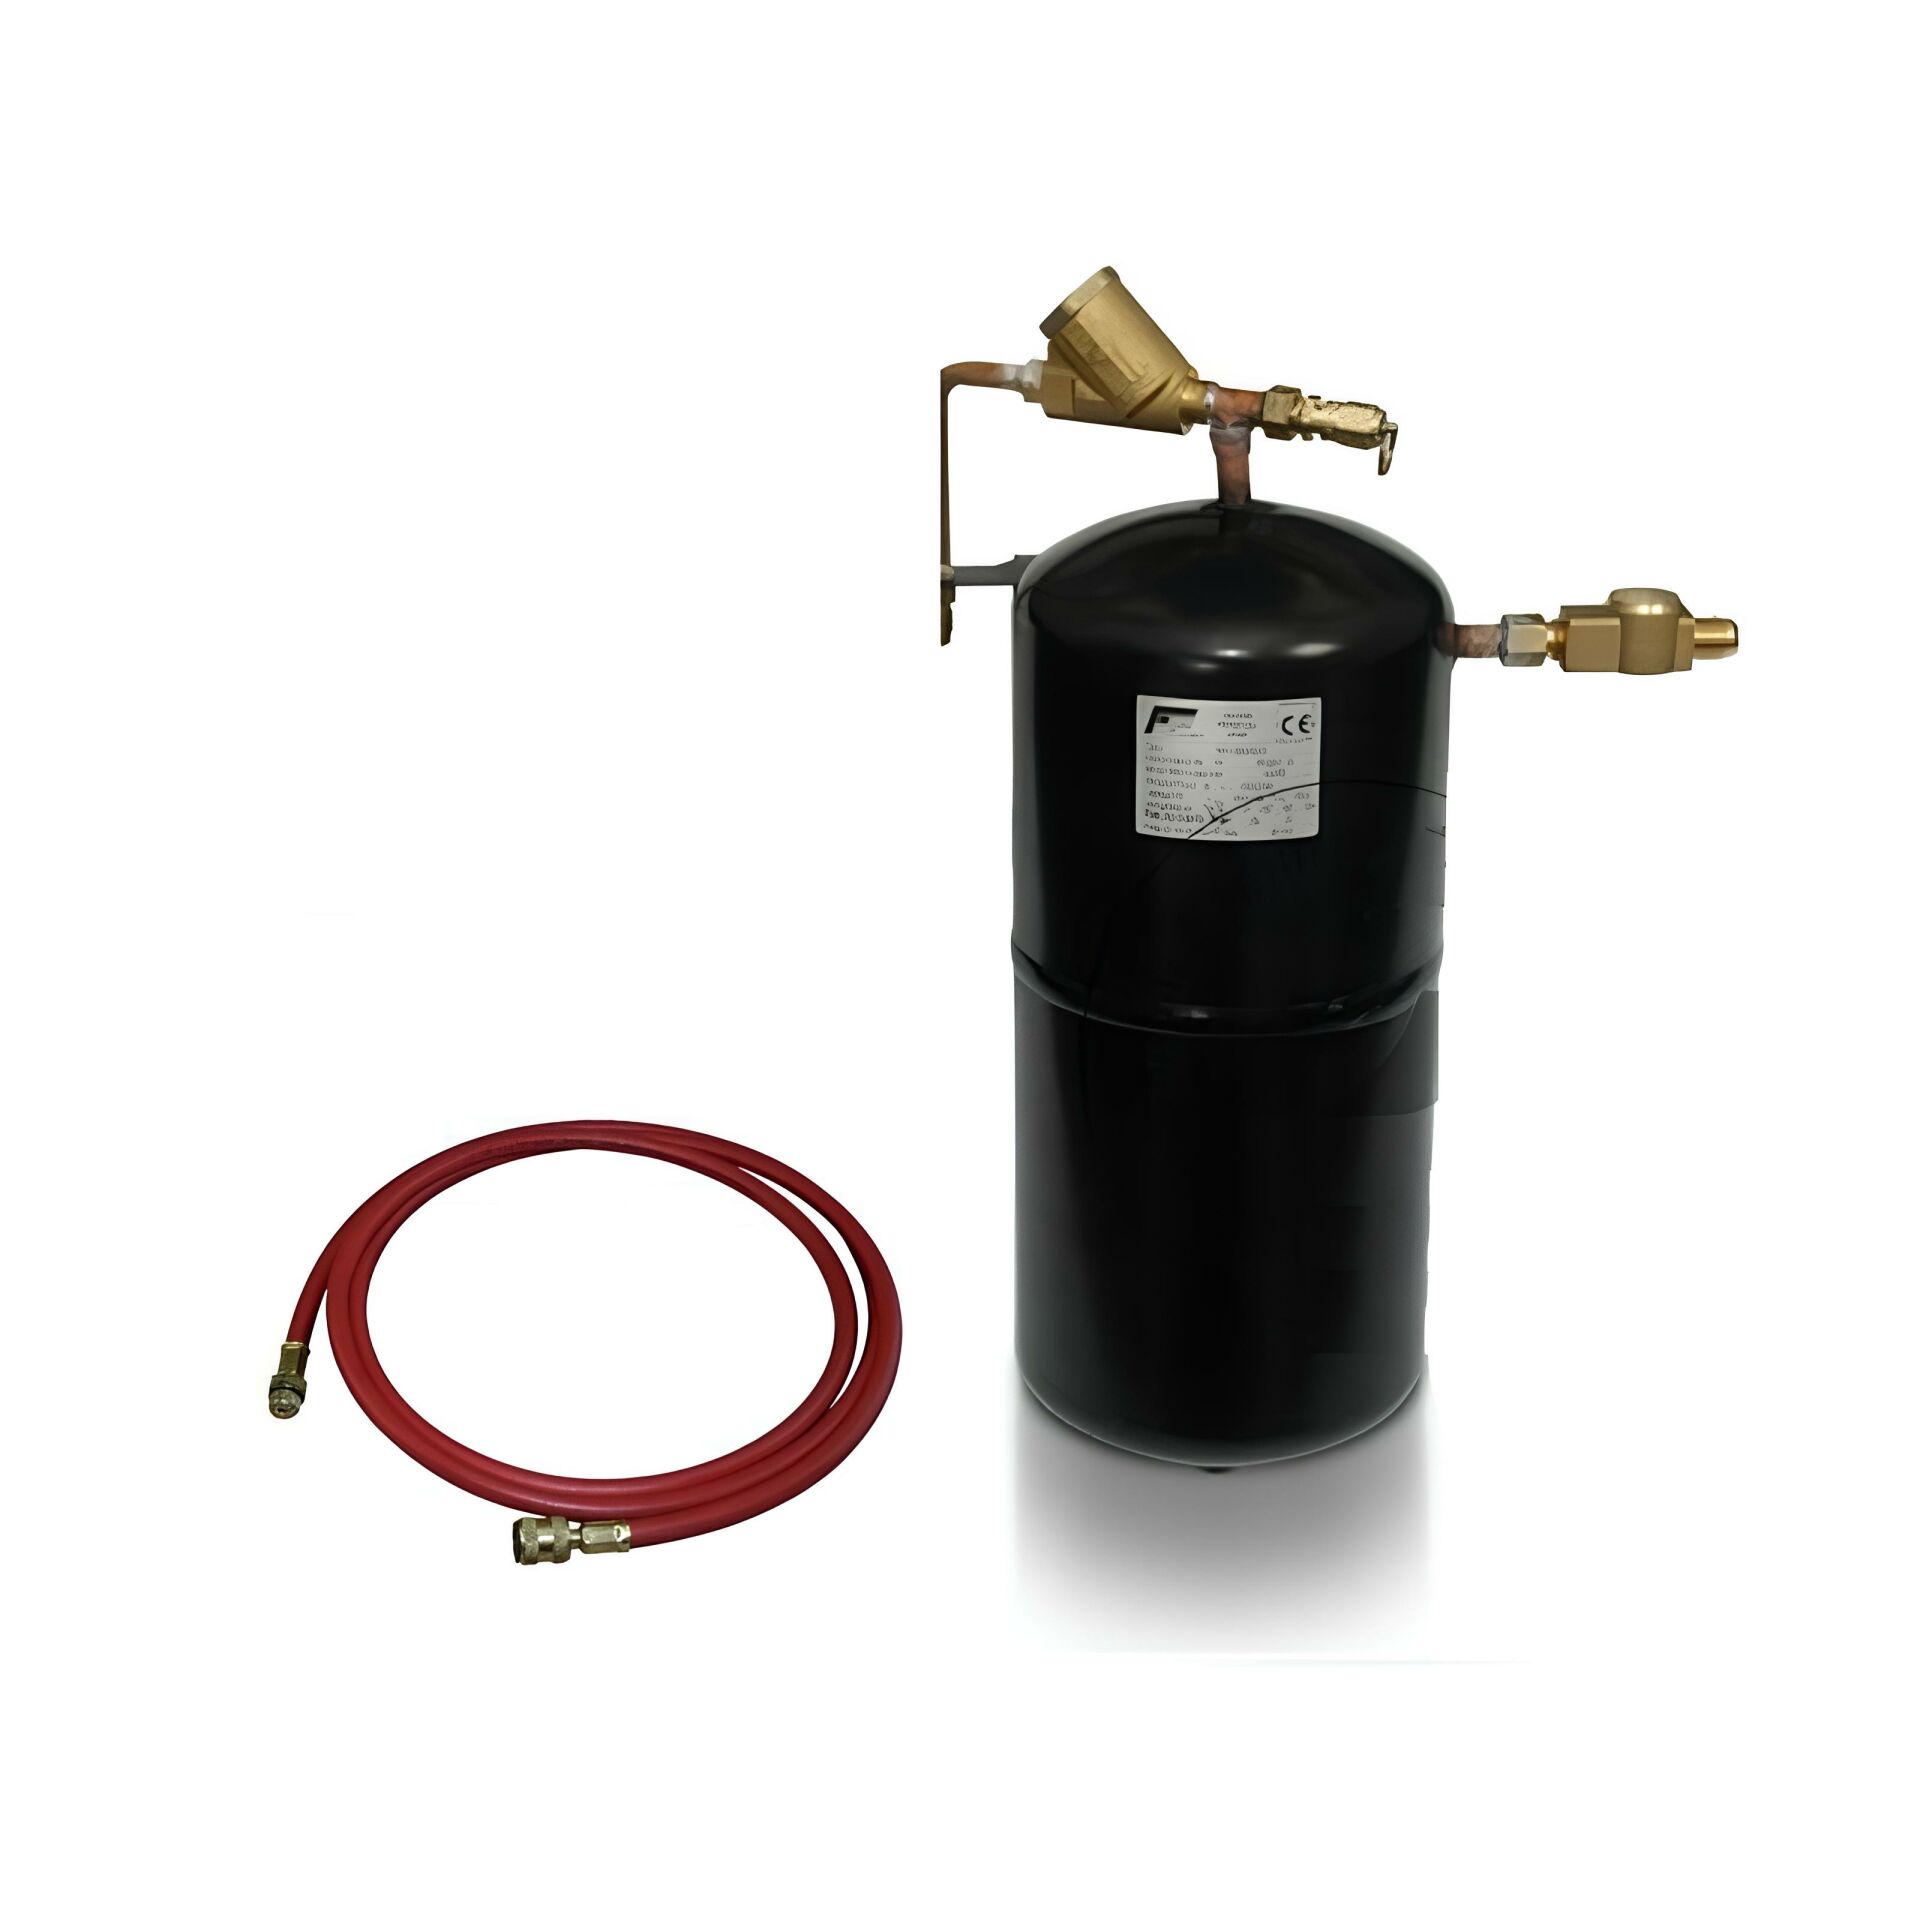 BASIC FLUSHING KIT
Kit made up of receiver tank, connection hose and basic couplers